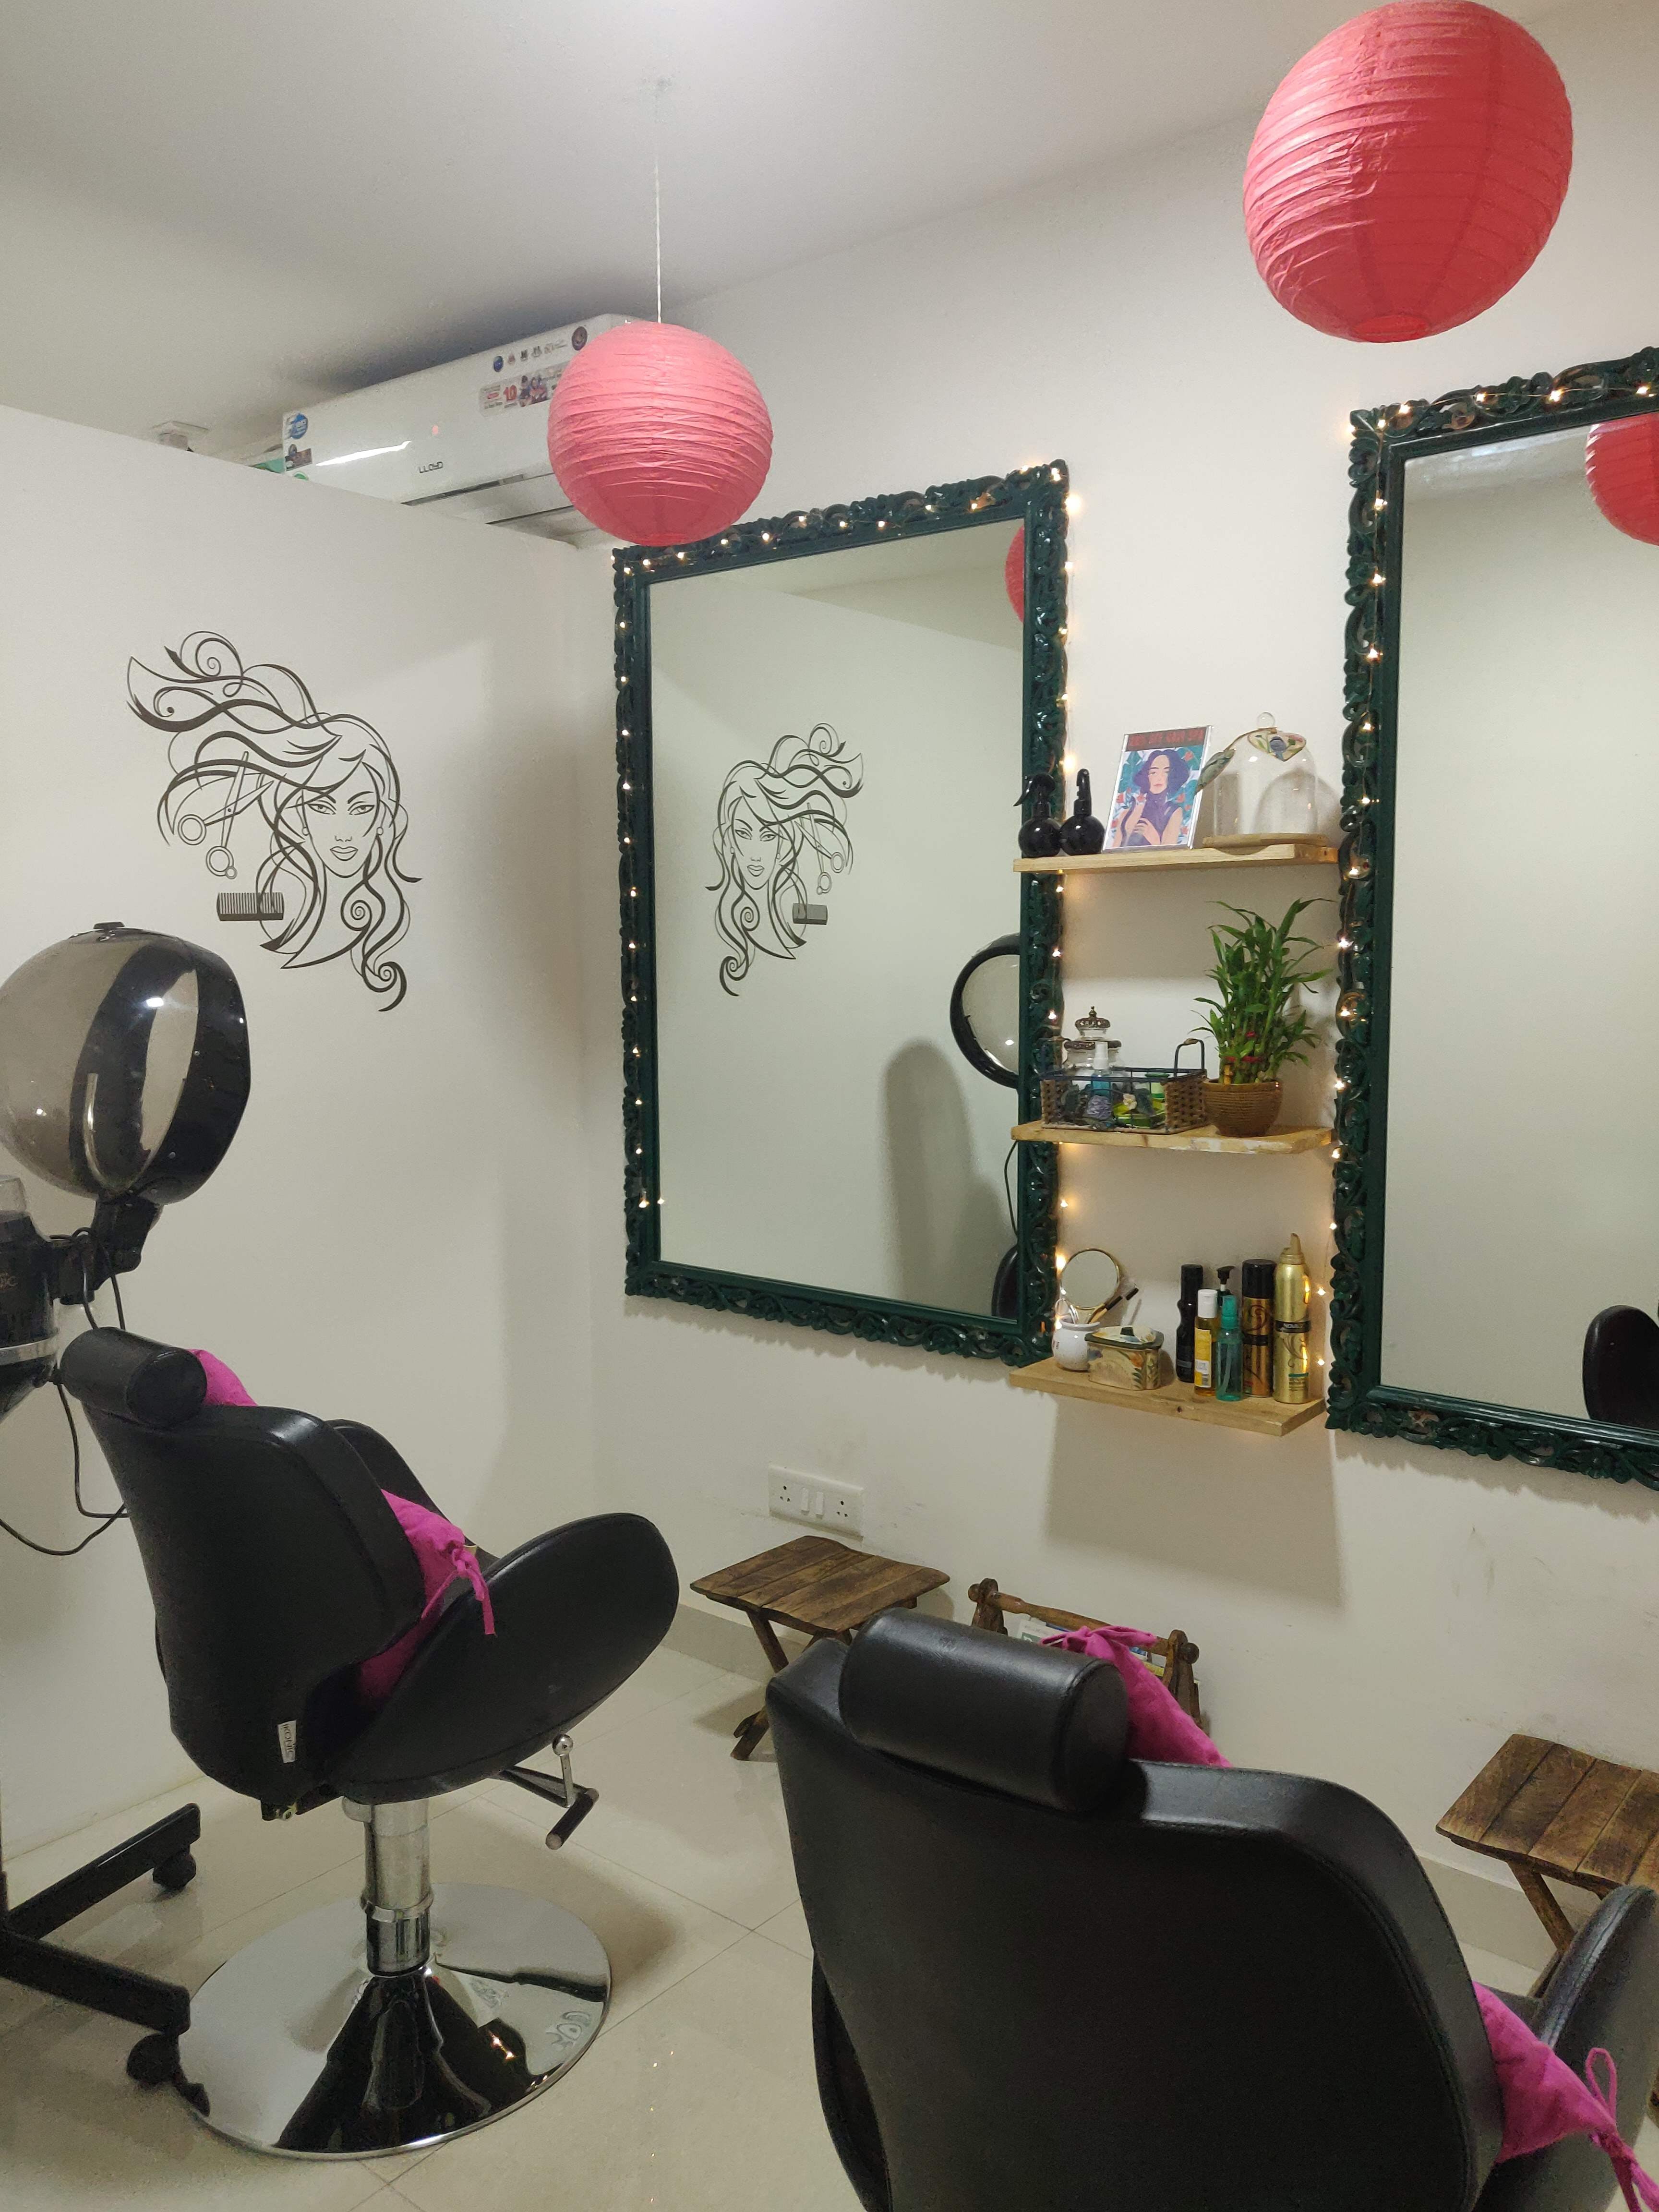 Pink,Room,Furniture,Interior design,Design,Chair,Beauty salon,Magenta,Material property,Balloon